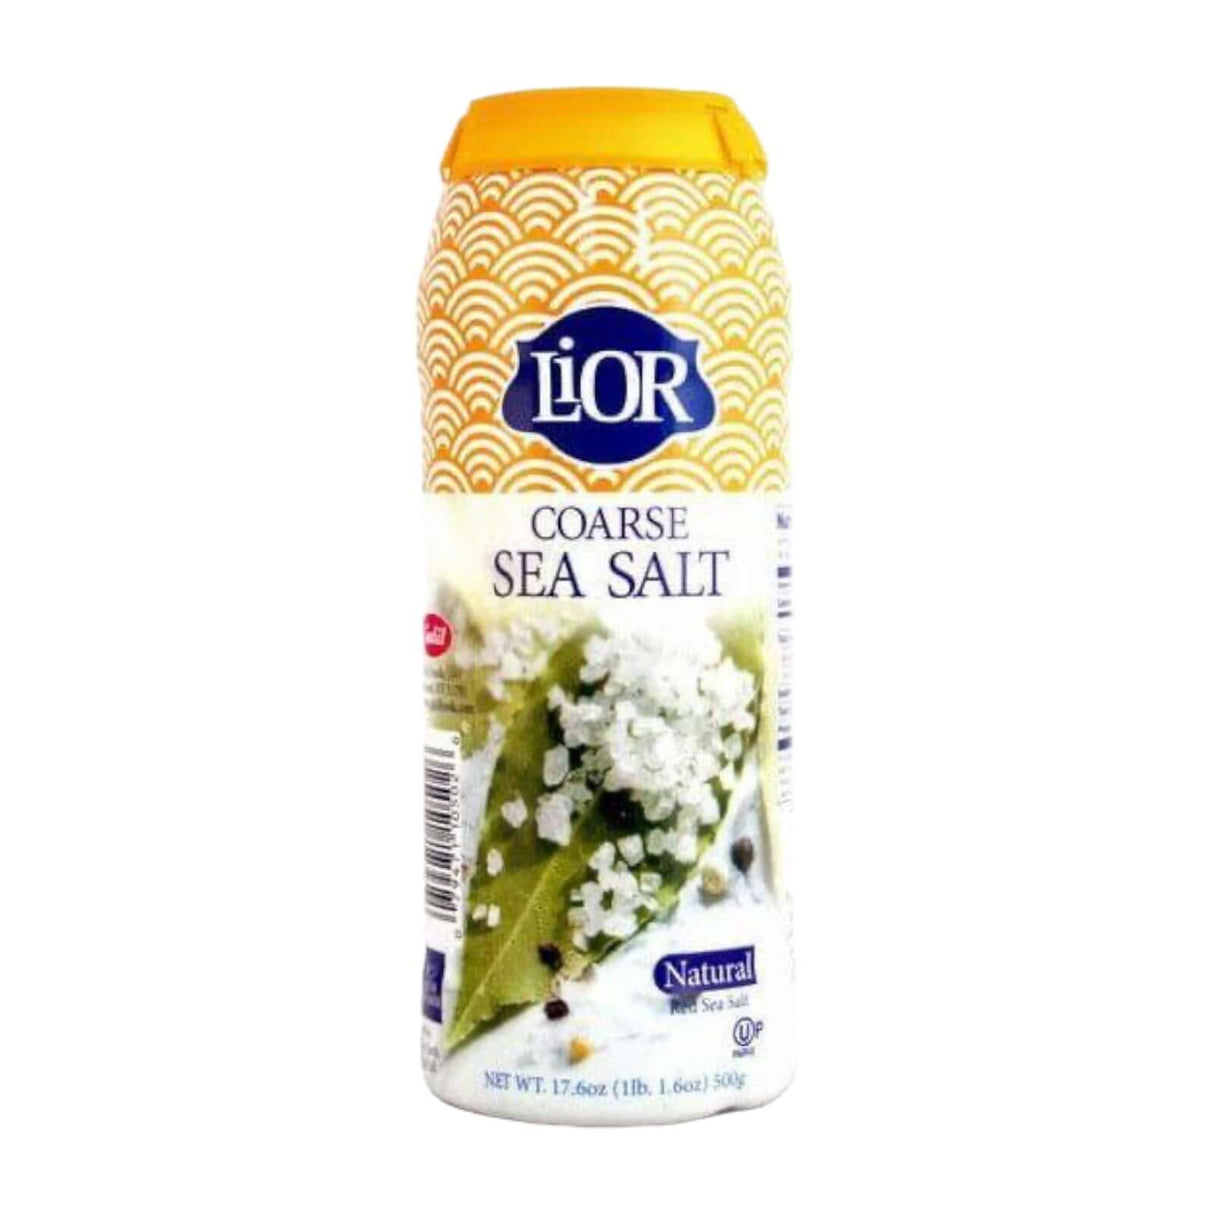 Lior Coarse Sea Salt